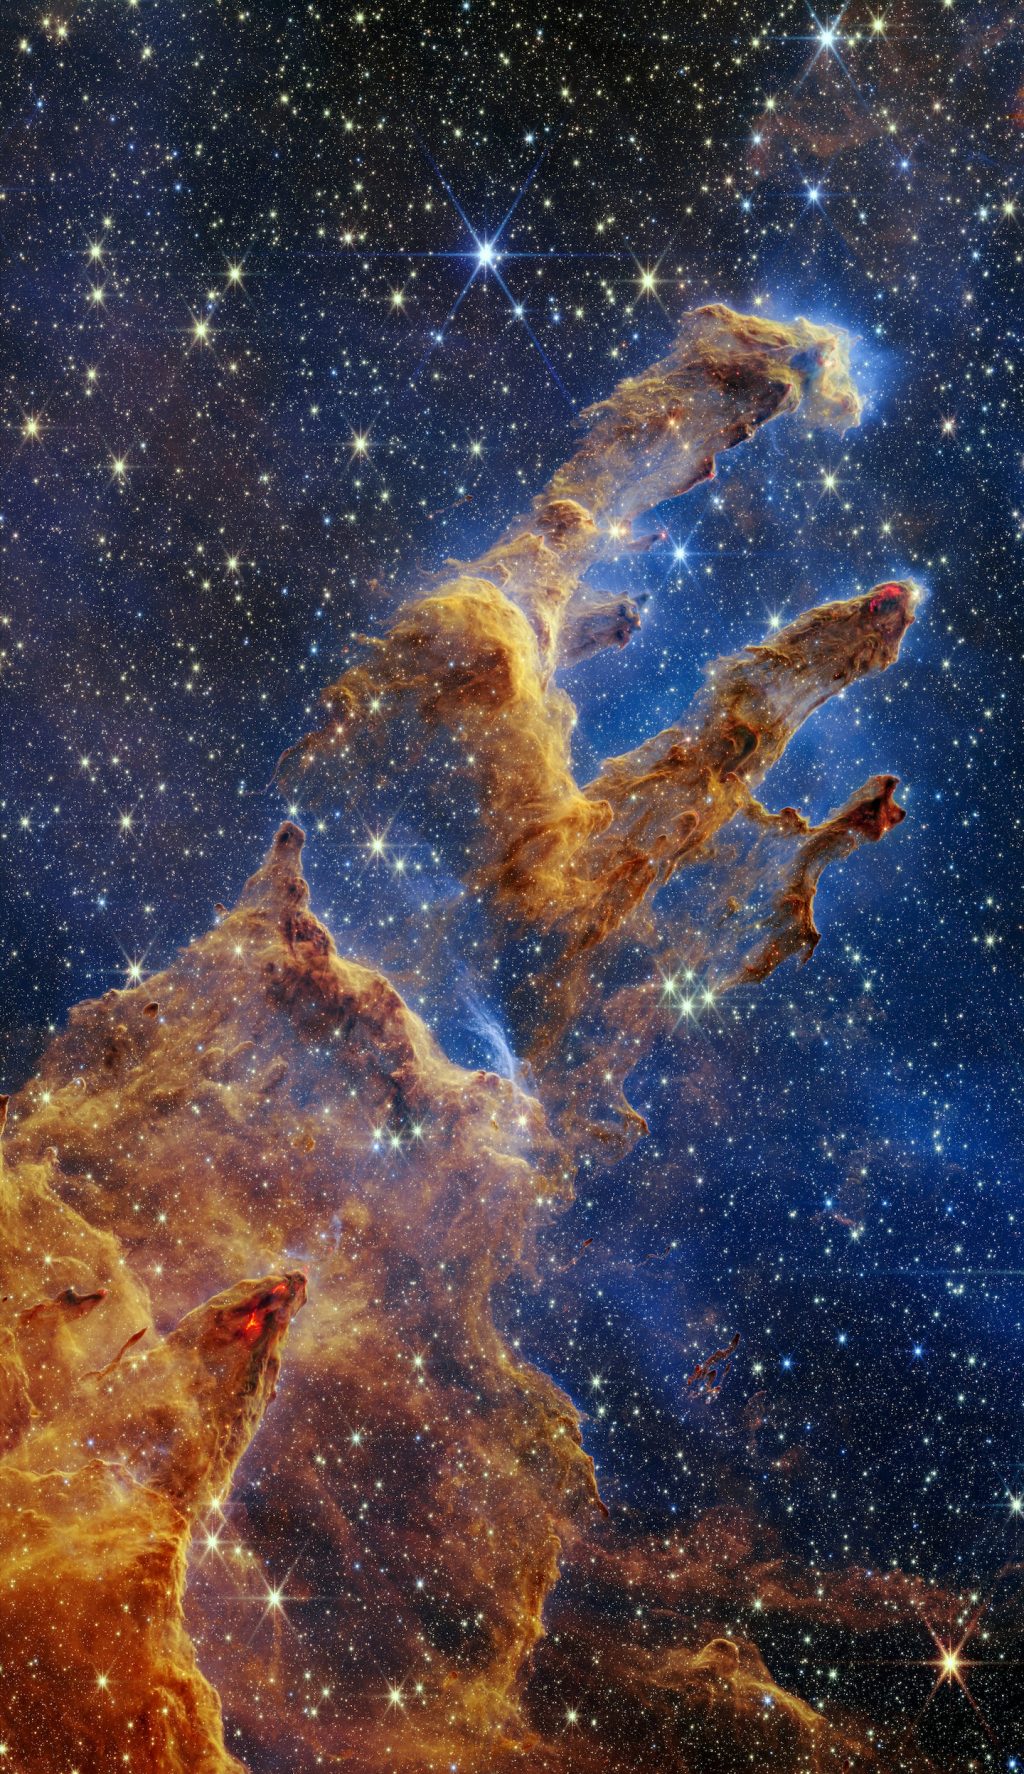 NASA's Webb Telescope Takes New Image of 'Pillars of Creation'